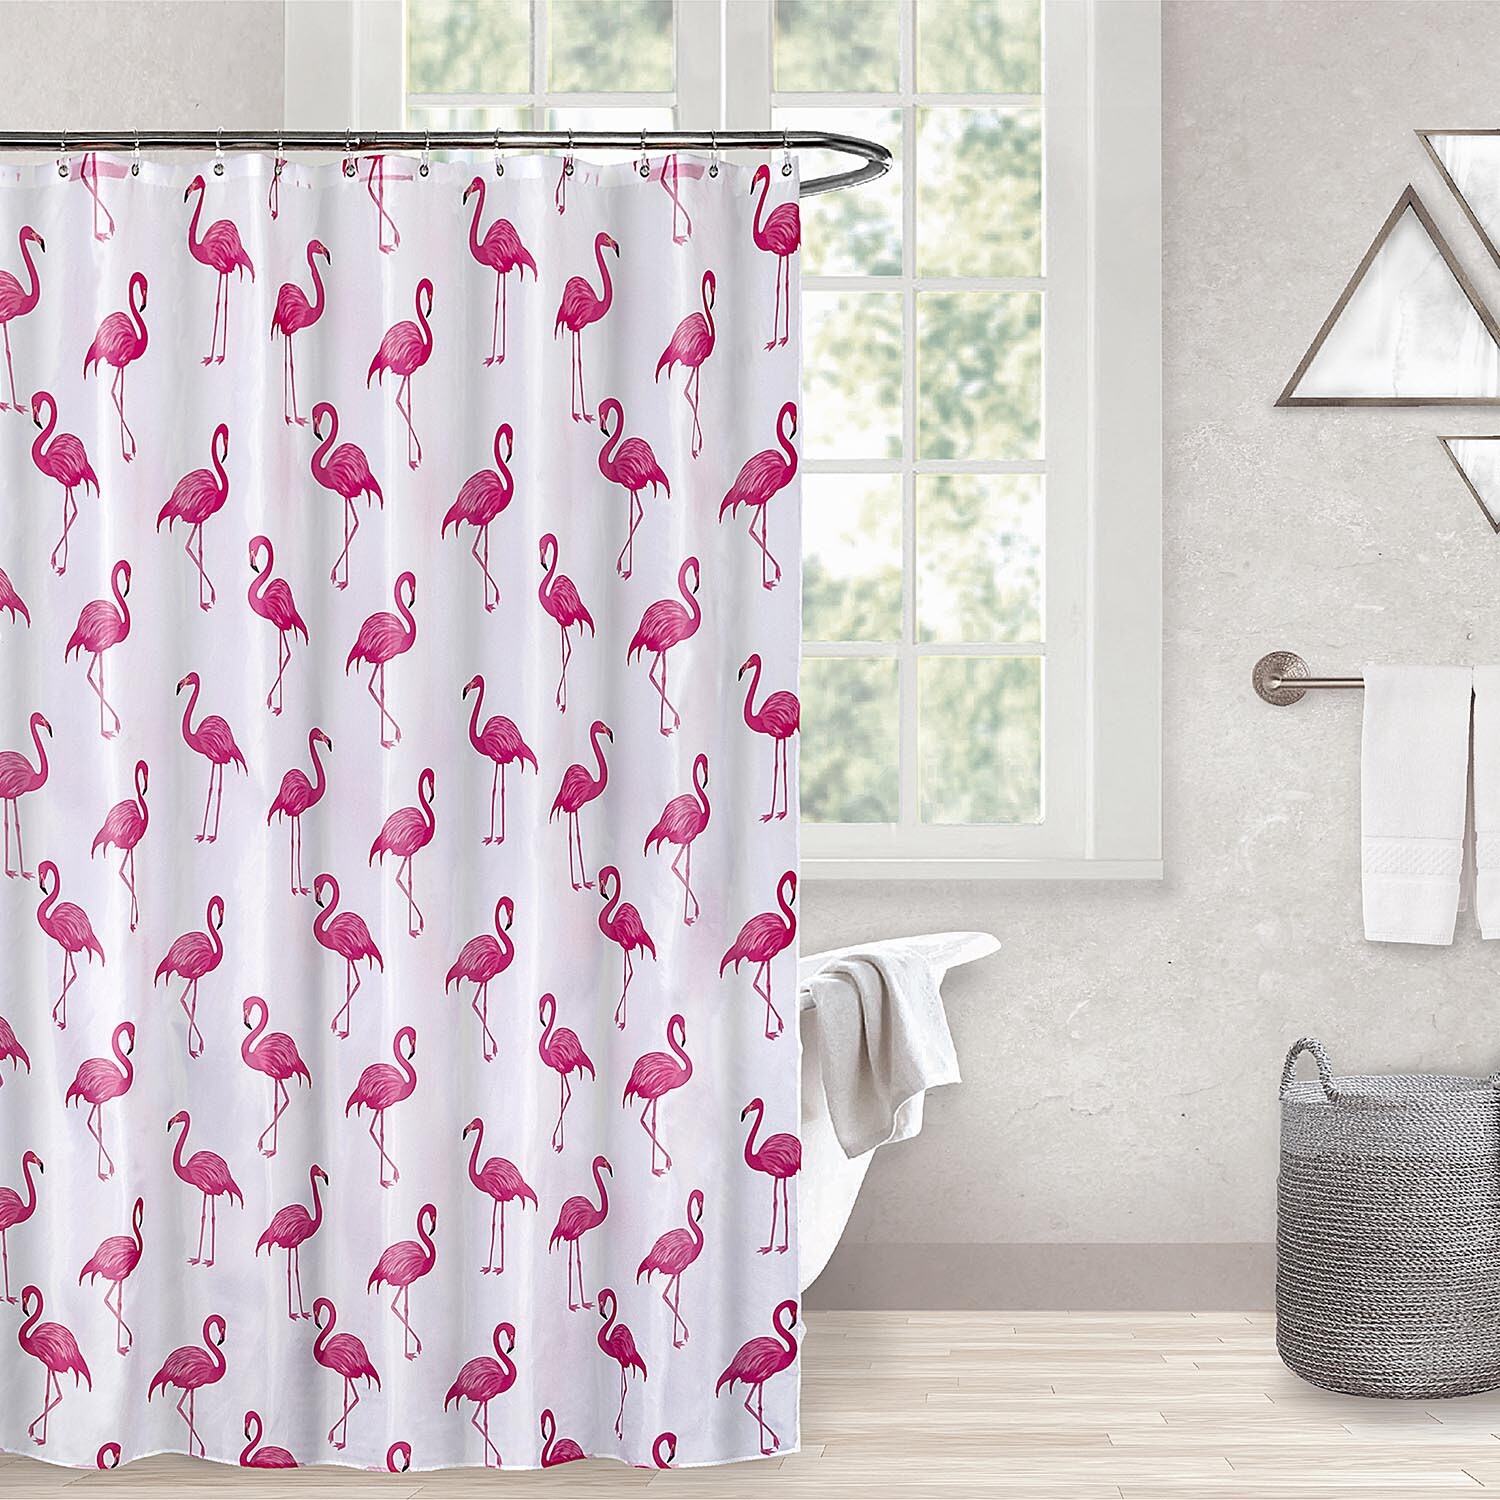 Aura Bathroom Flamingo Shower Curtain 180 x 180cm Image